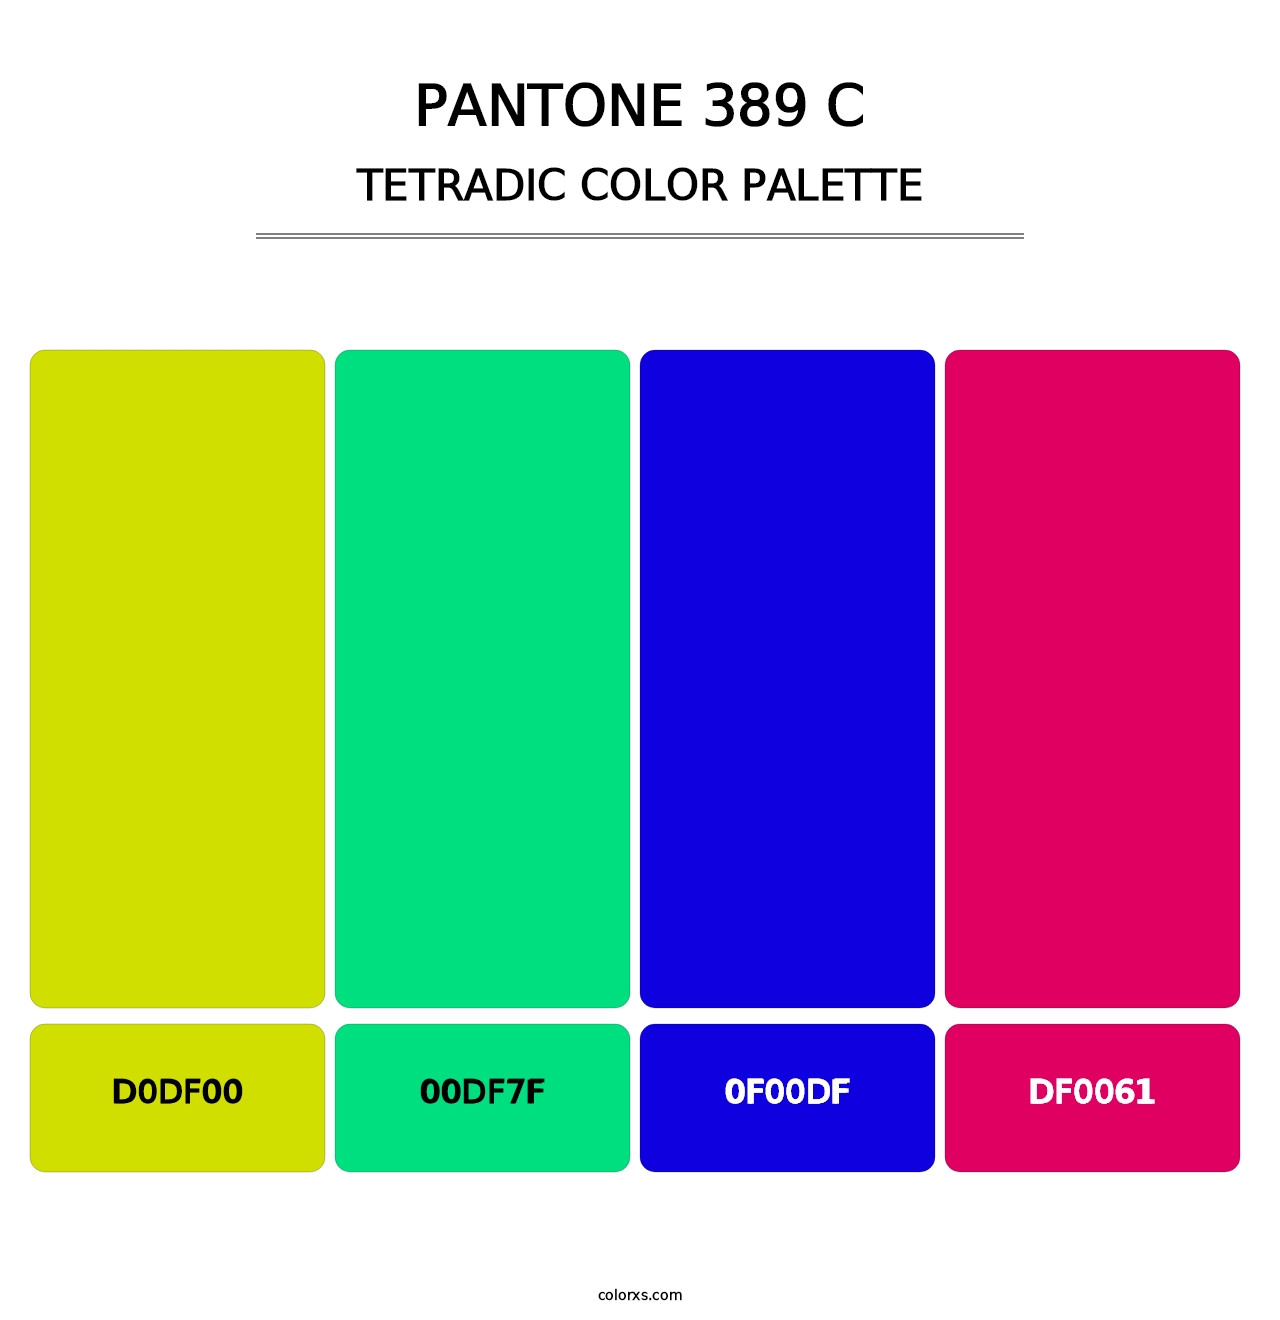 PANTONE 389 C - Tetradic Color Palette